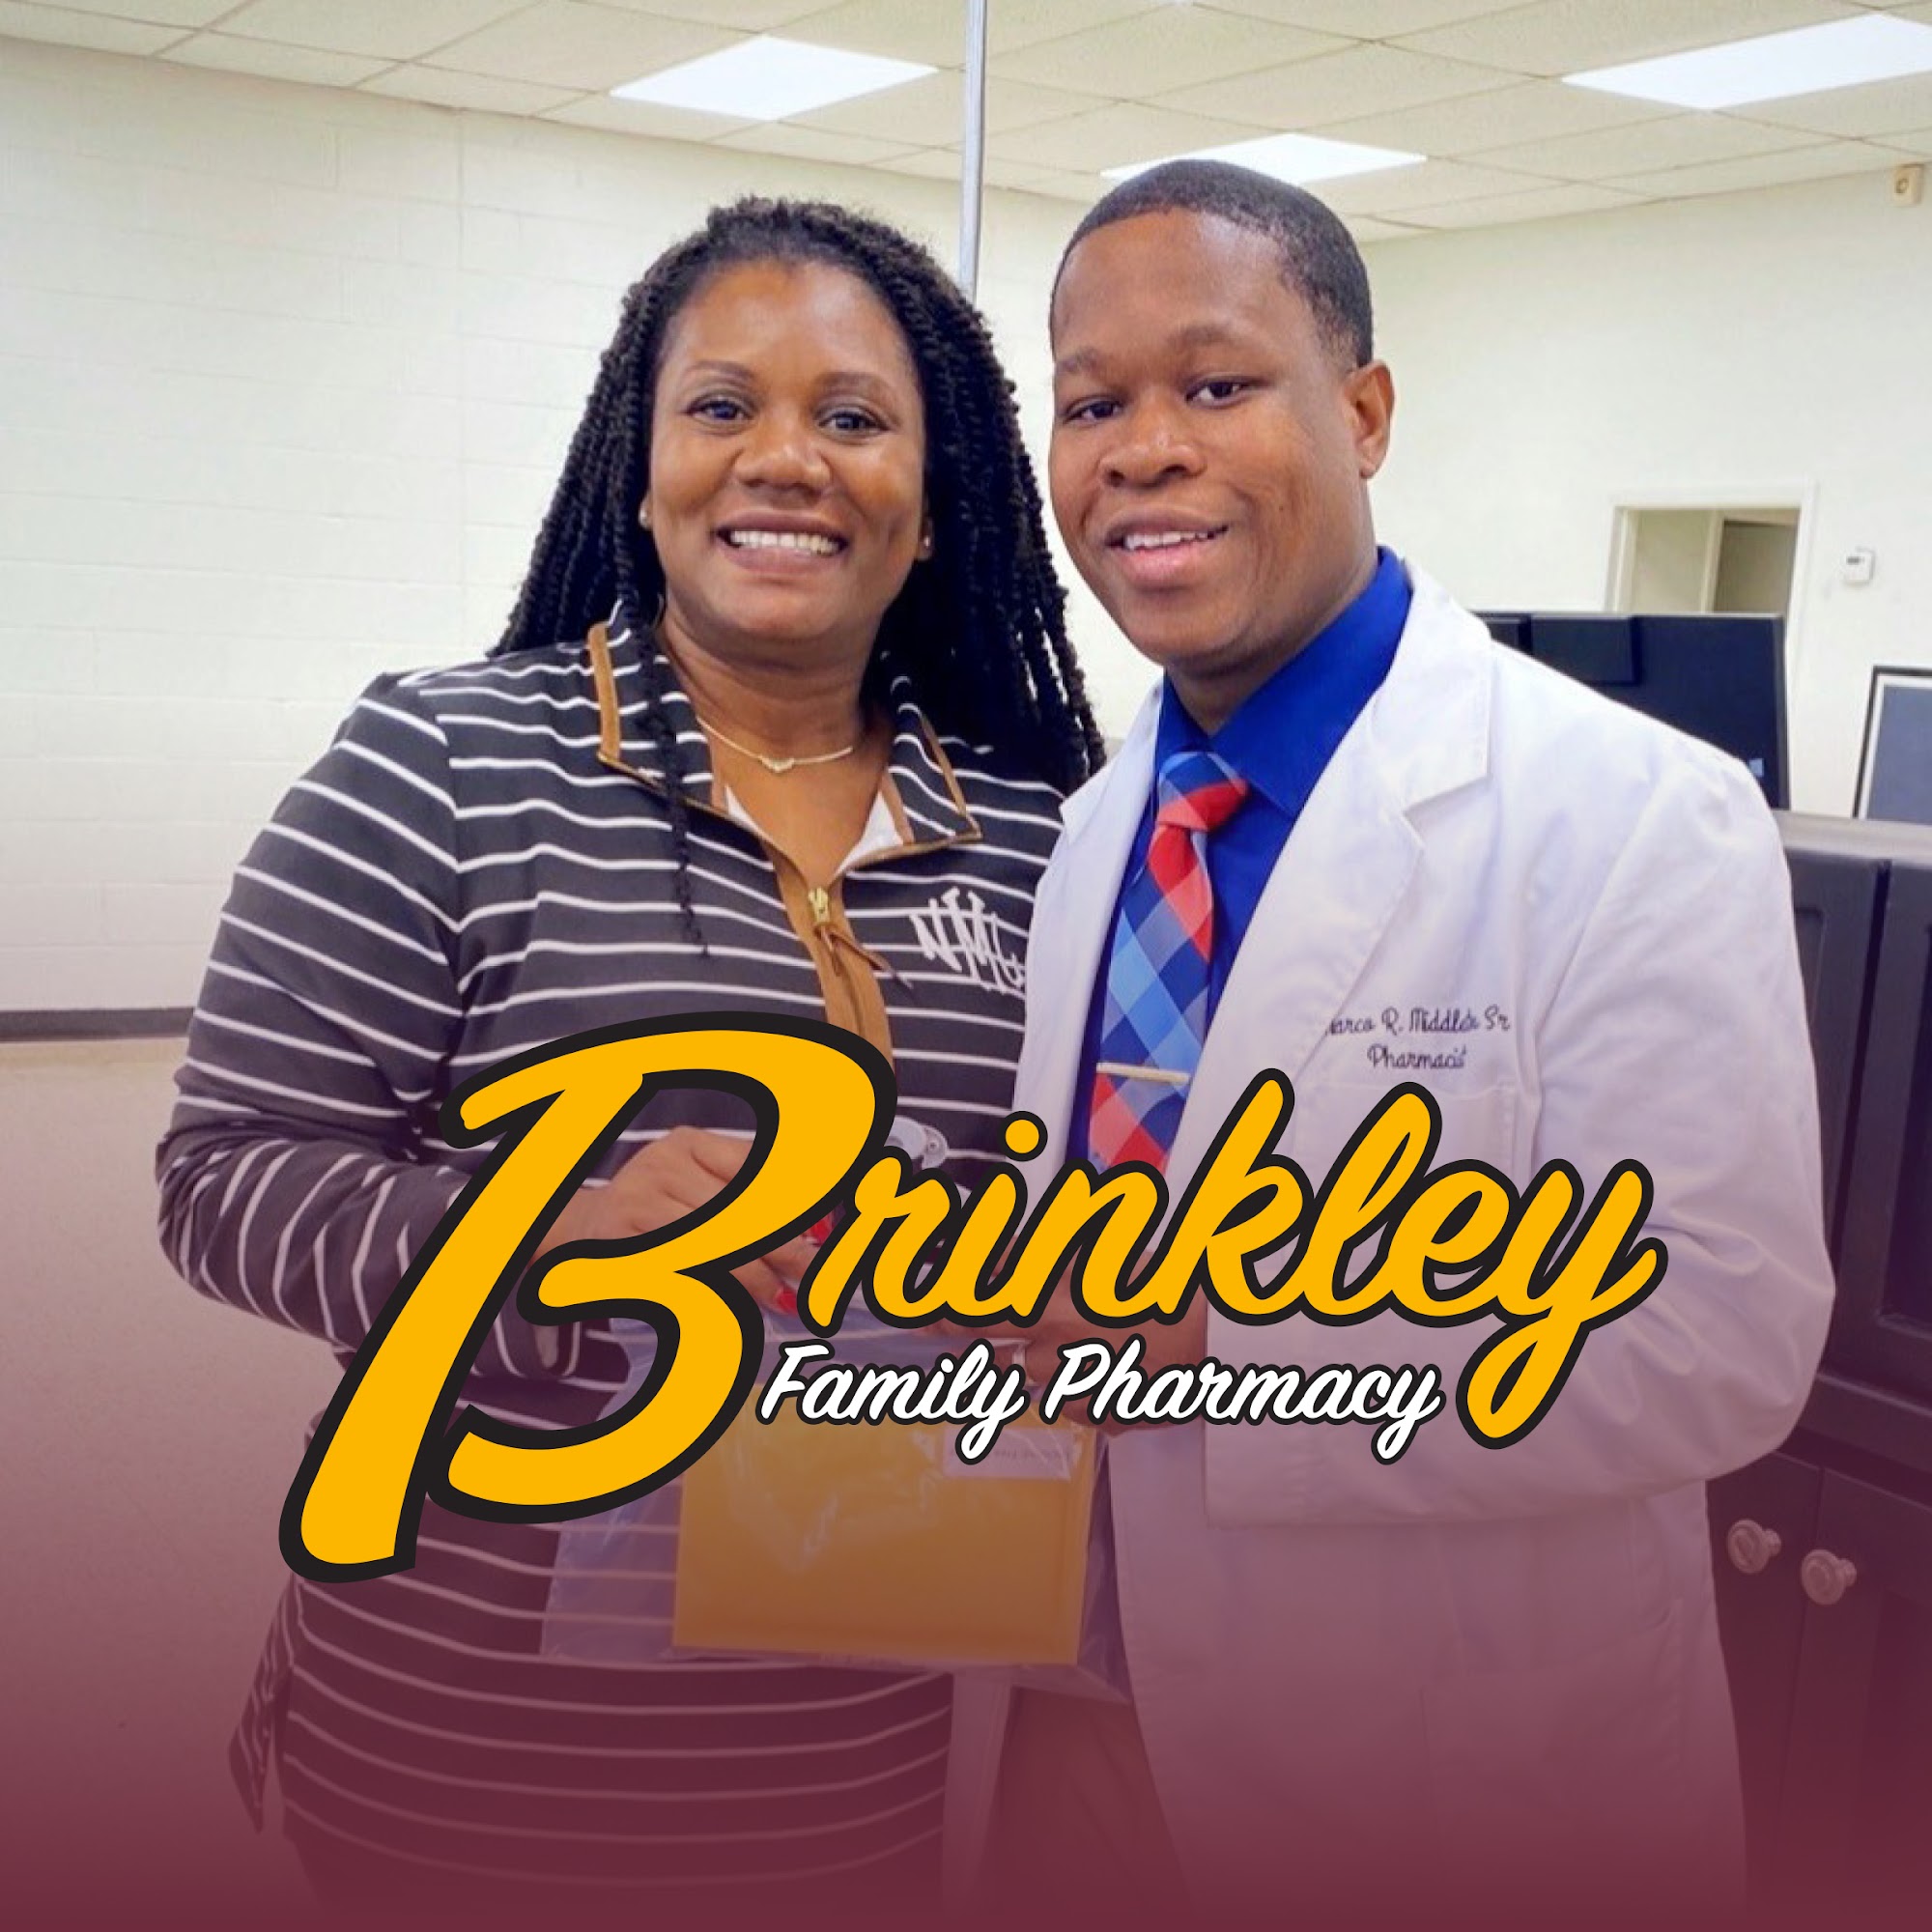 Brinkley Family Pharmacy